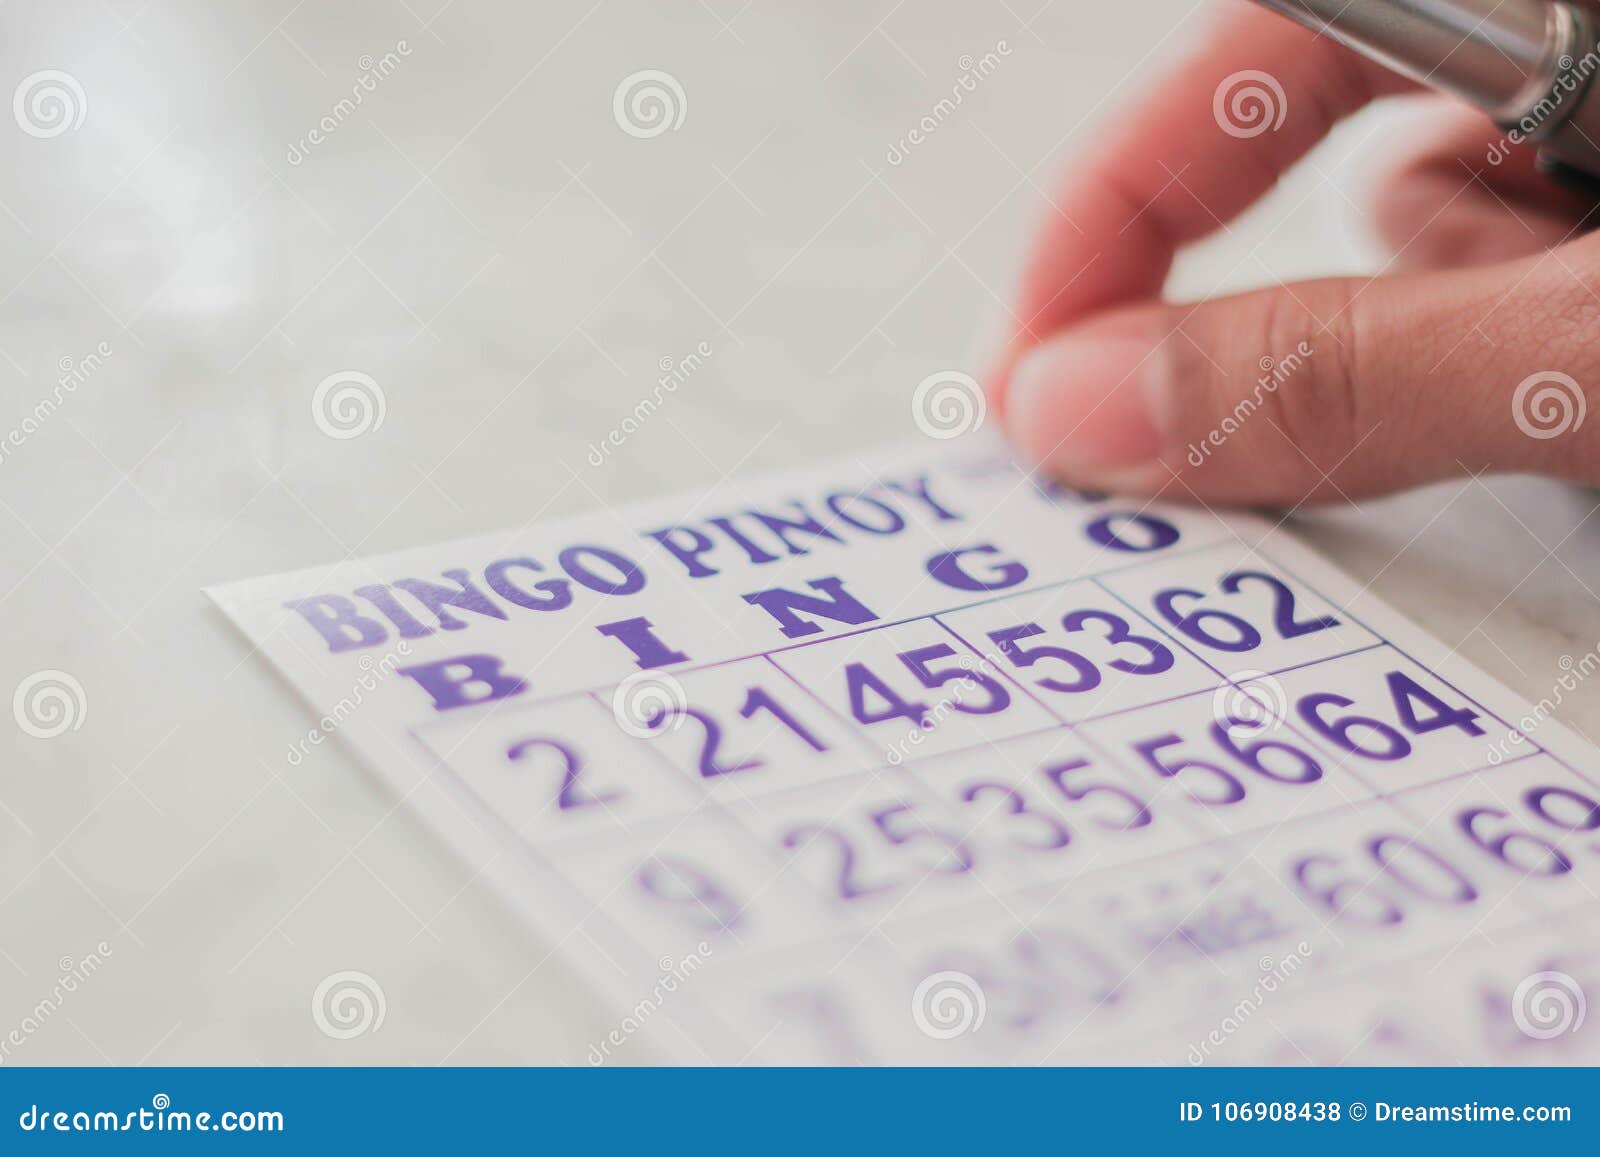 Pinoy bingo terms